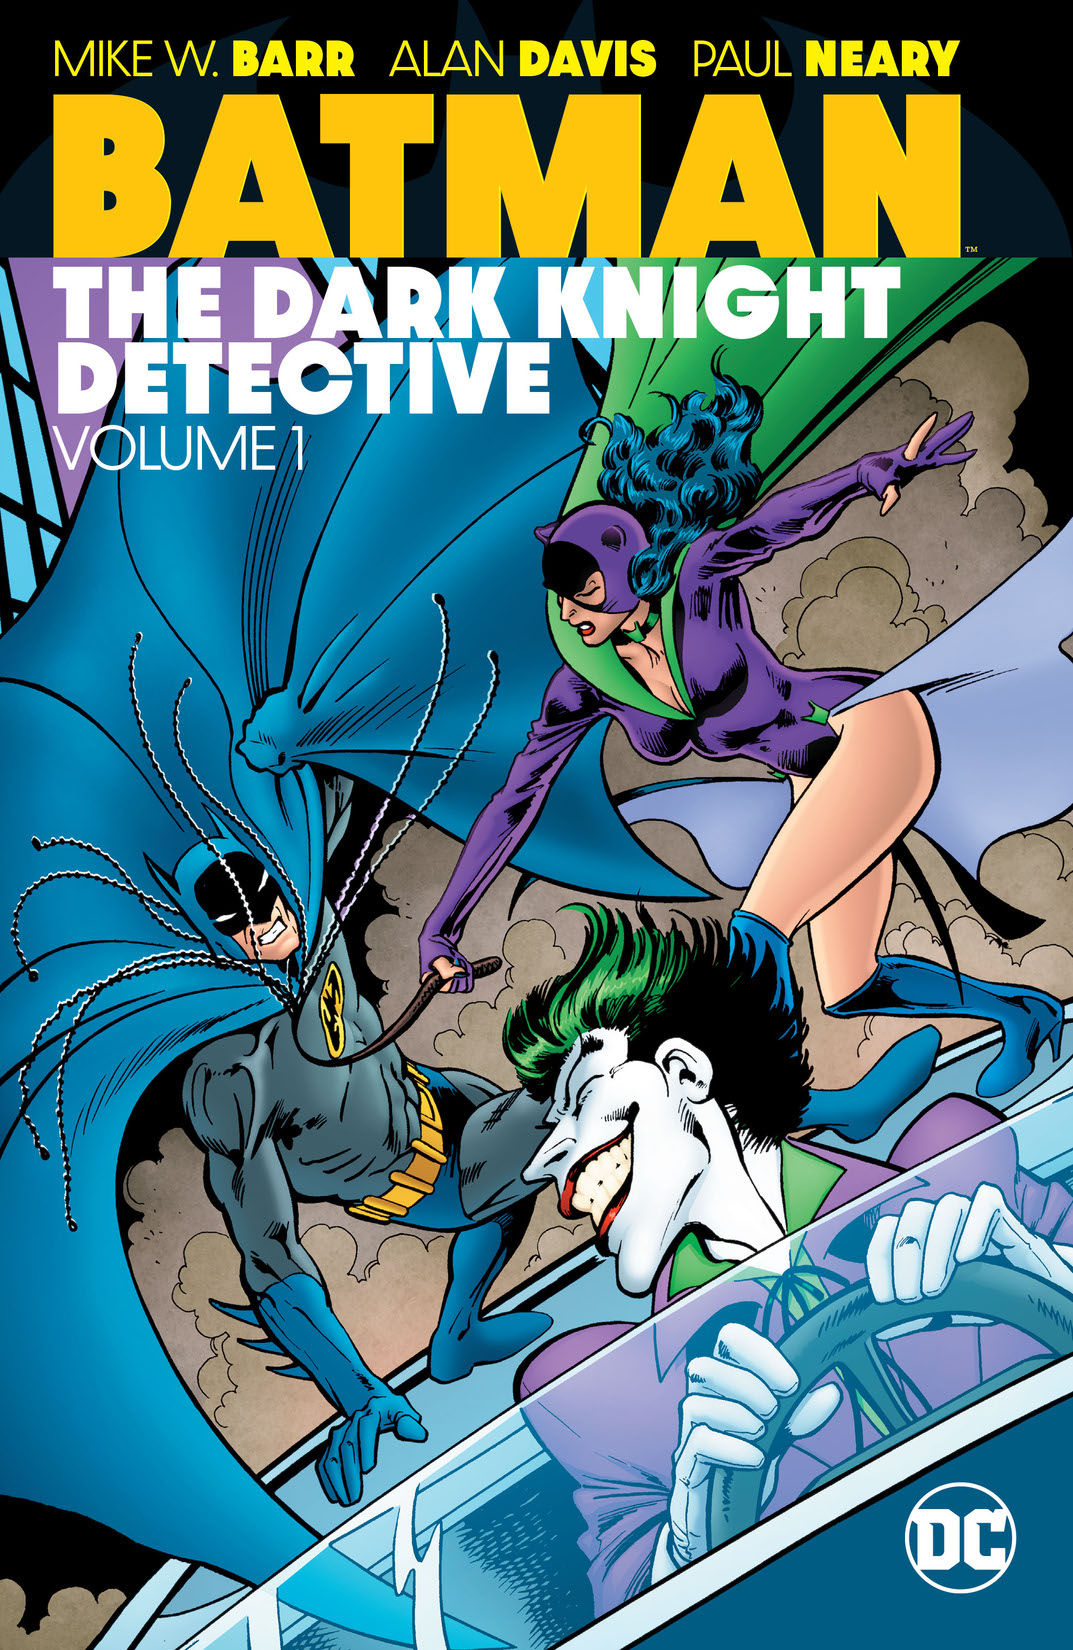 Batman: The Dark Knight Detective Vol. 1 preview images